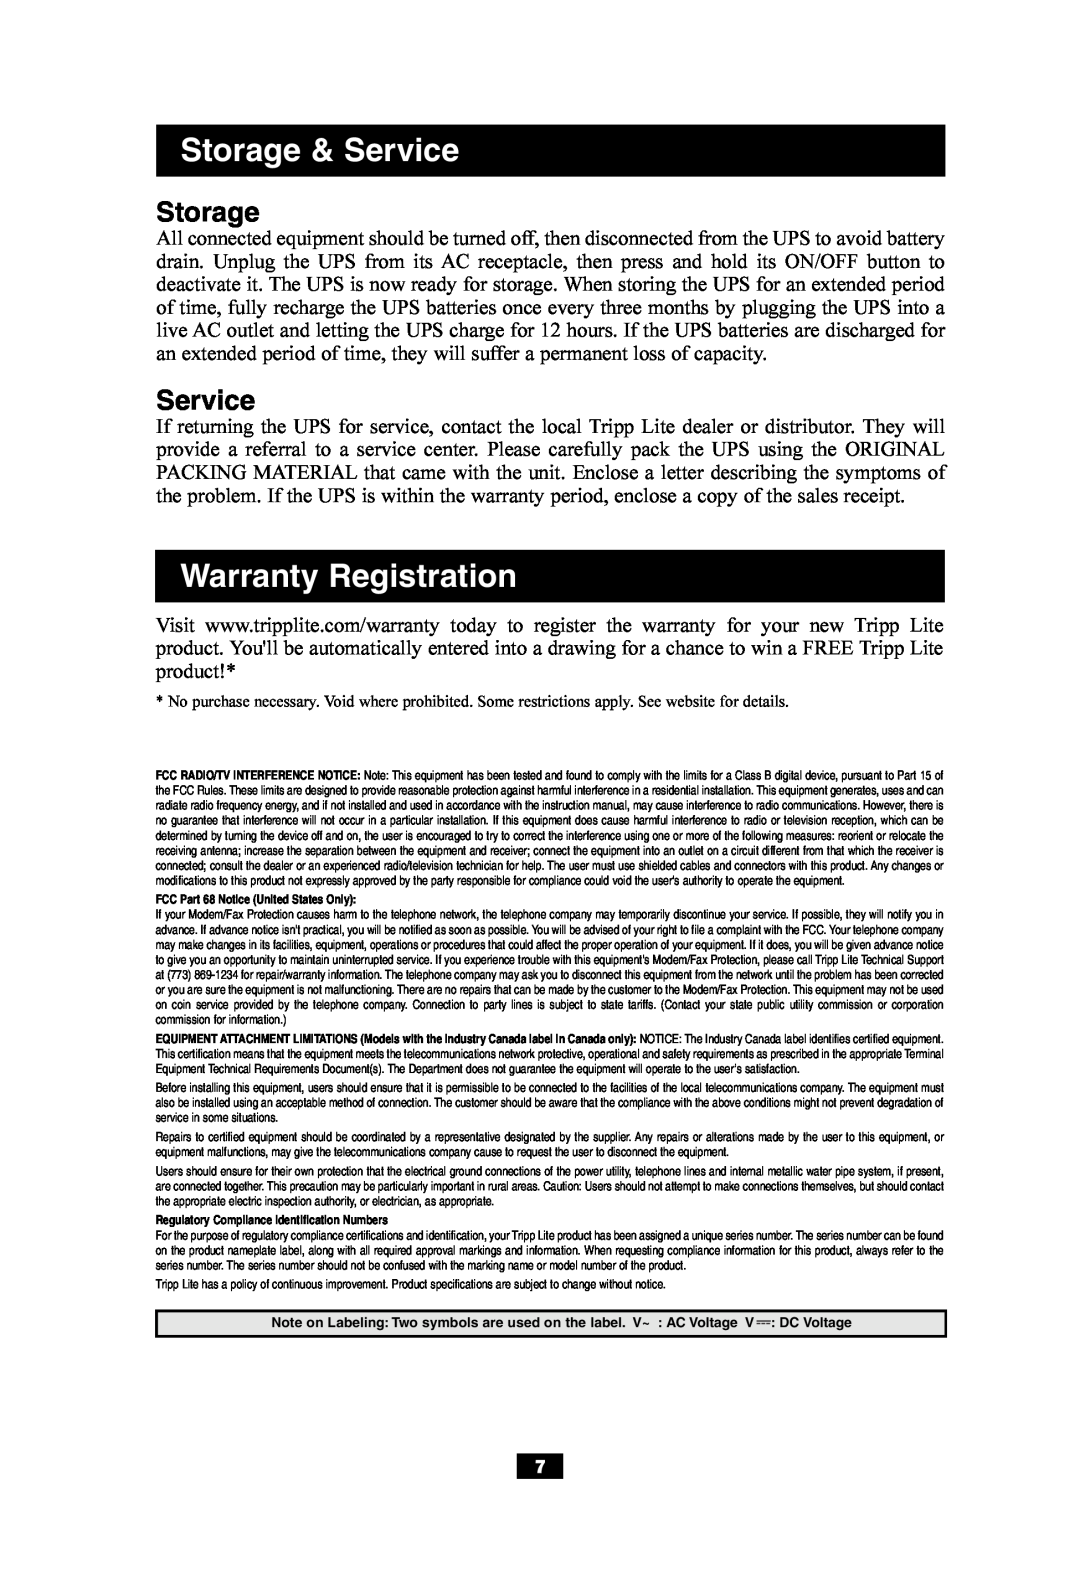 Tripp Lite SMART550USB owner manual Storage & Service, Warranty Registration, FCC Part 68 Notice United States Only 